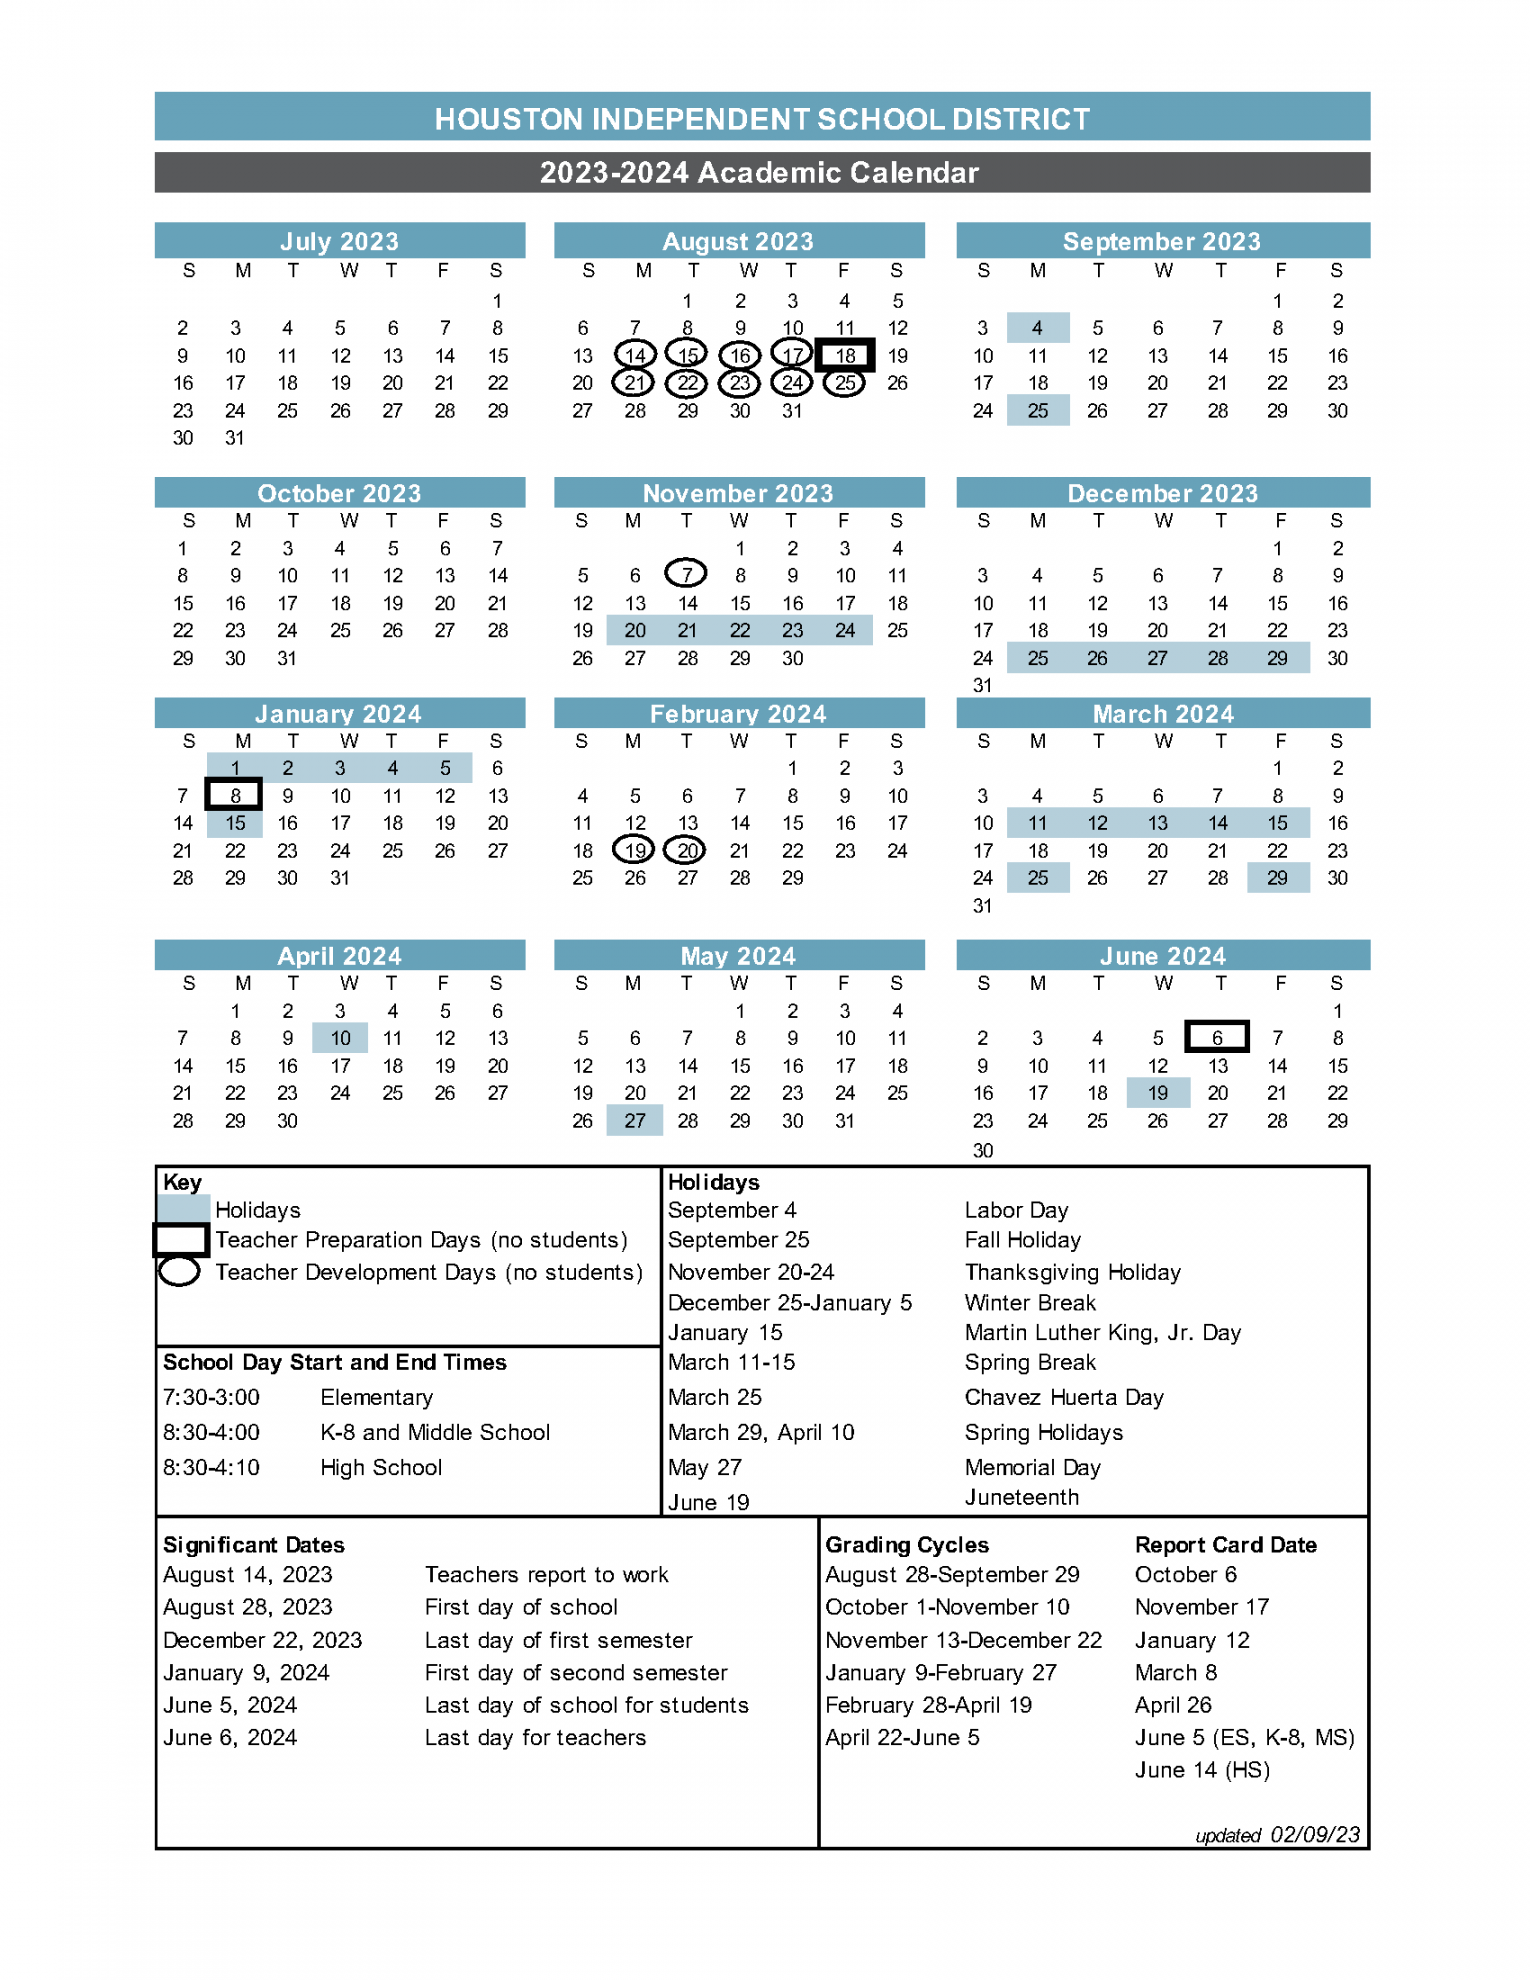 HISD School Board approves - Academic Calendar - News Blog